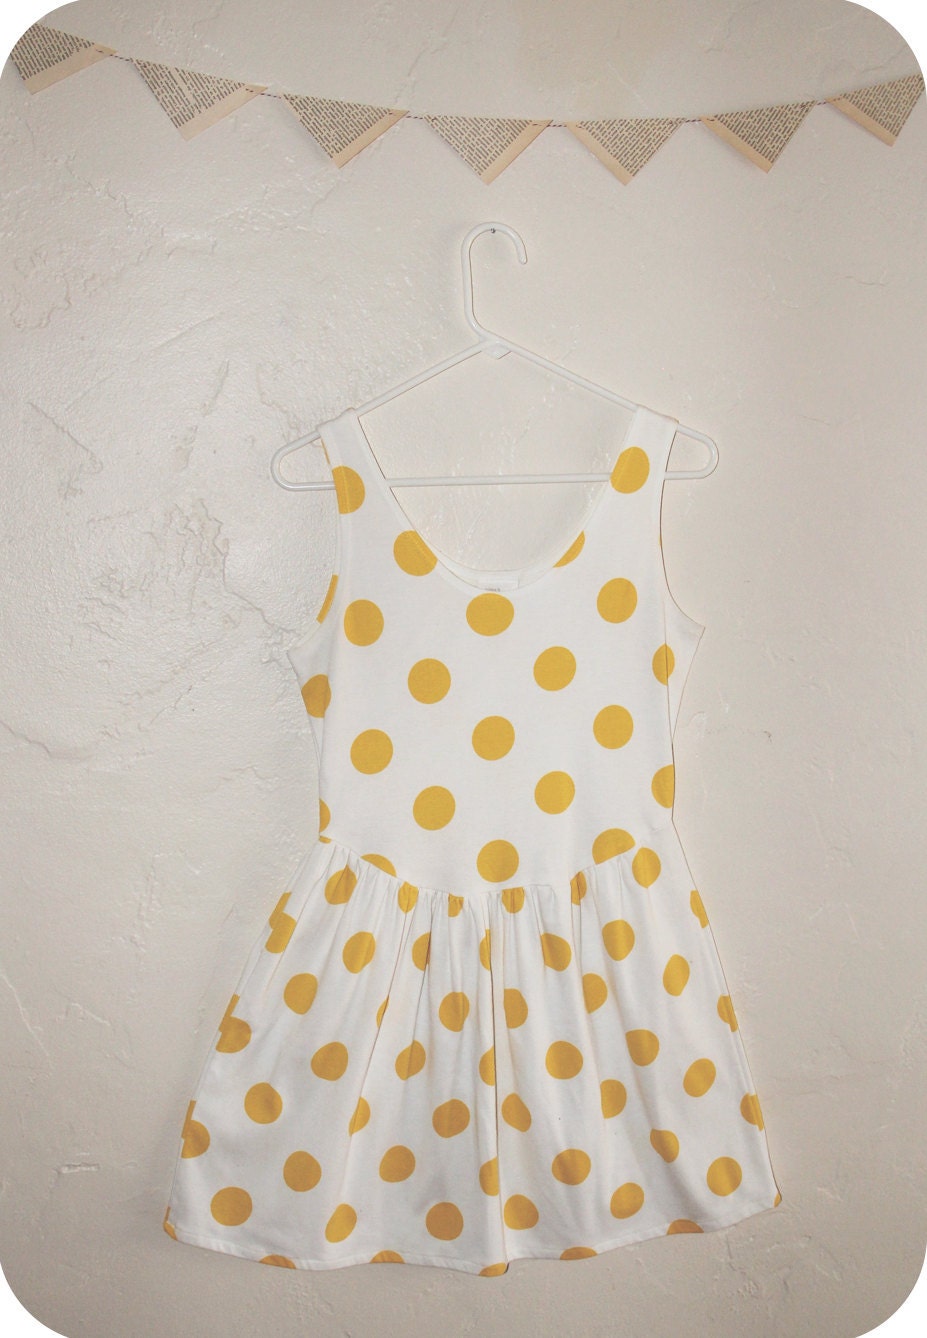 Polka Dot Vintage Dress - Cute Yellow and White SALE